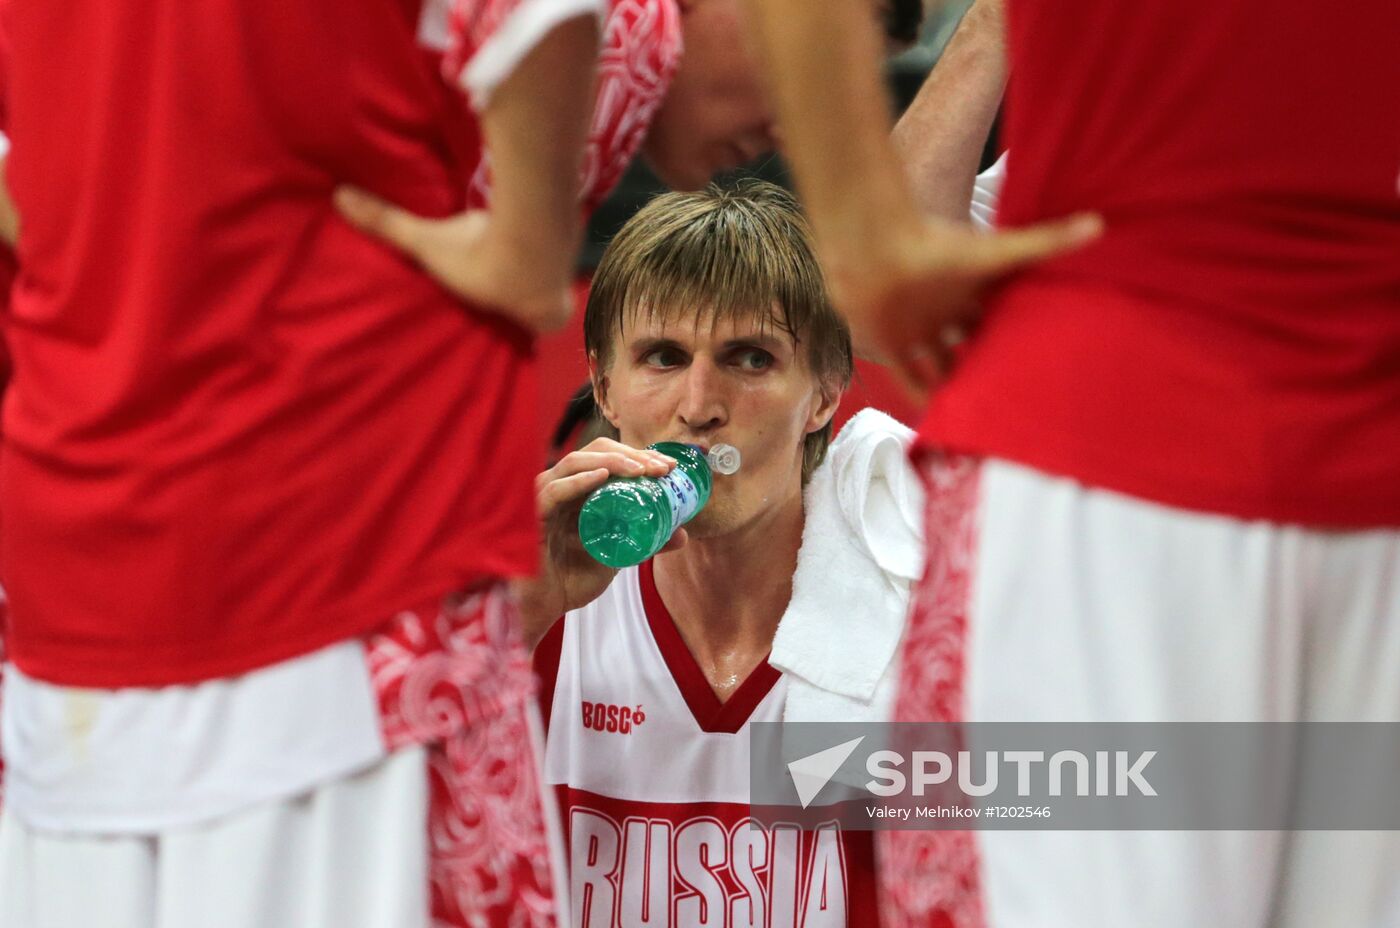 2012 Olympics. Men's Basketball. Russia vs. Spain